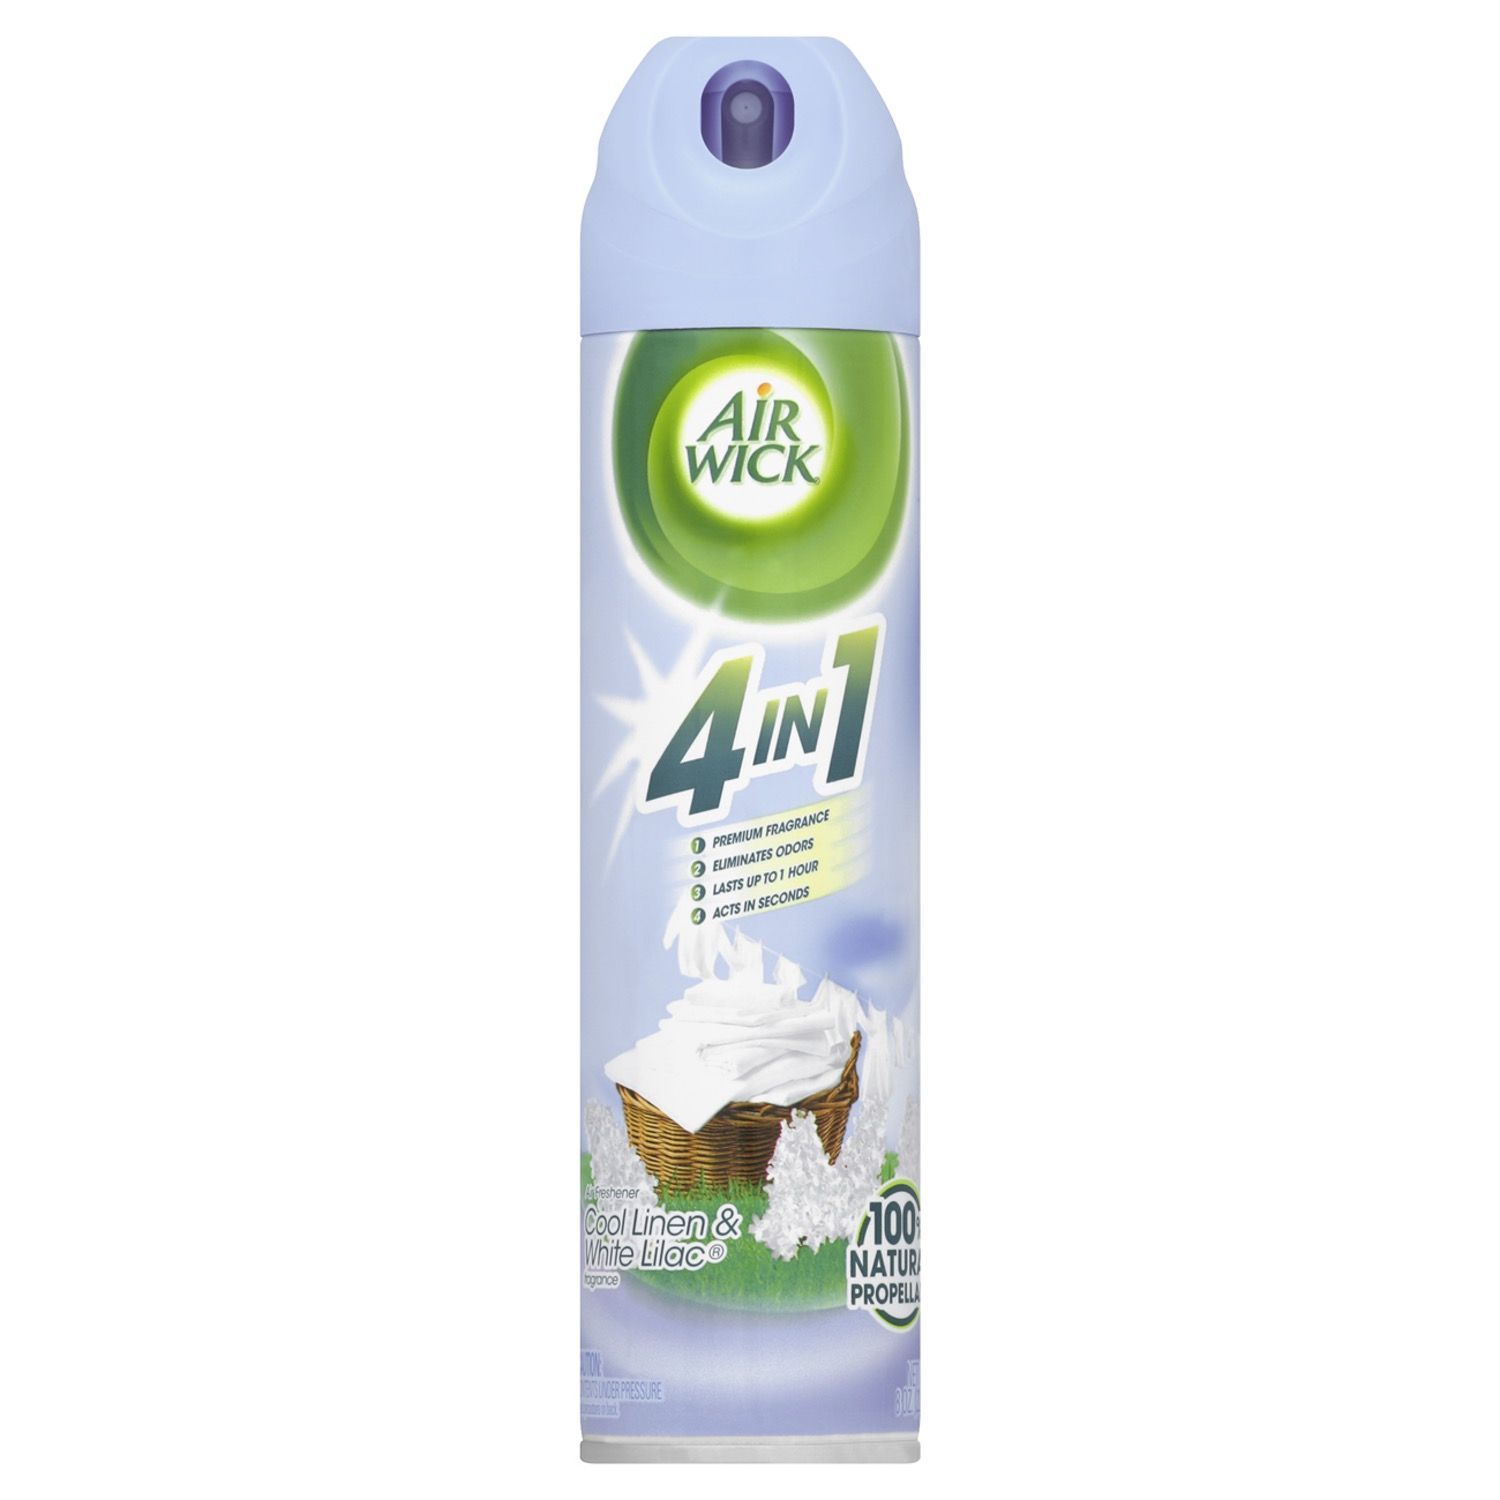 Airwick Air Freshener - Cool Linen & White Lilac - Aerosol - 8 oz - Cool Linen & White Lilac - 1 Each